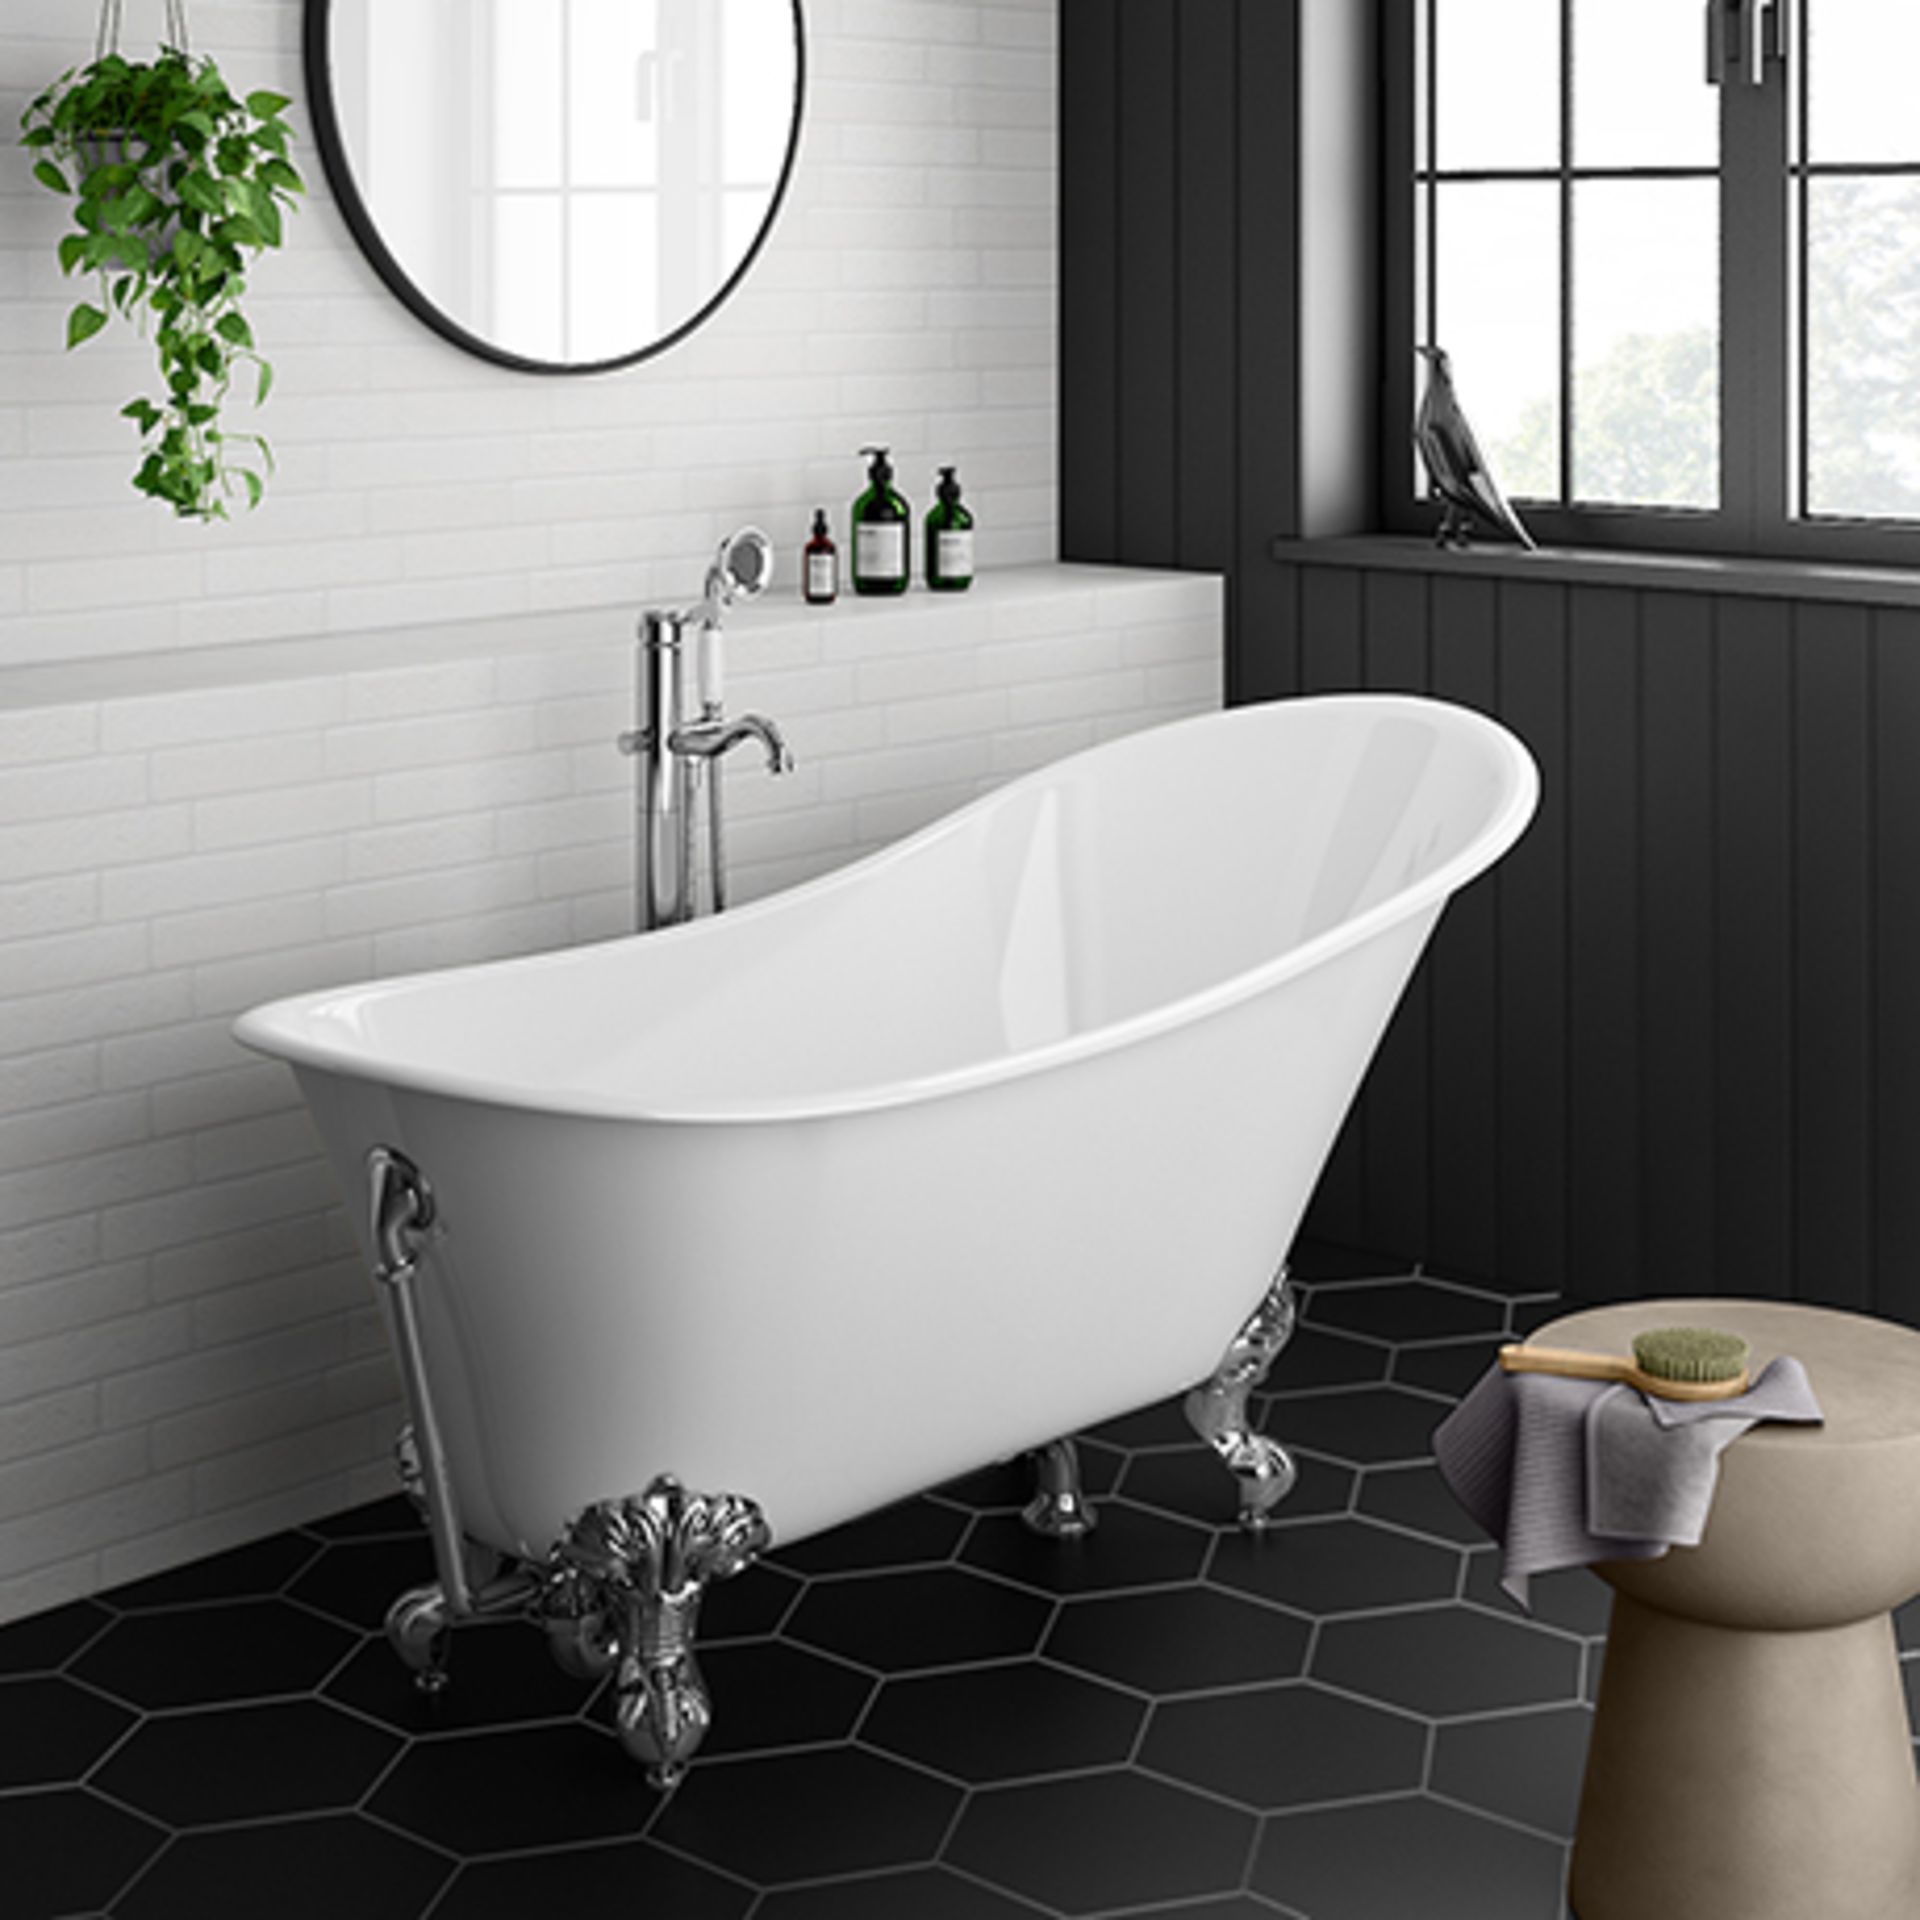 New (K1) 1770x705mm Traditional Slim Roll Top Slipper Bath - Chrome Feet. RRP £999.99.Bath Ma...